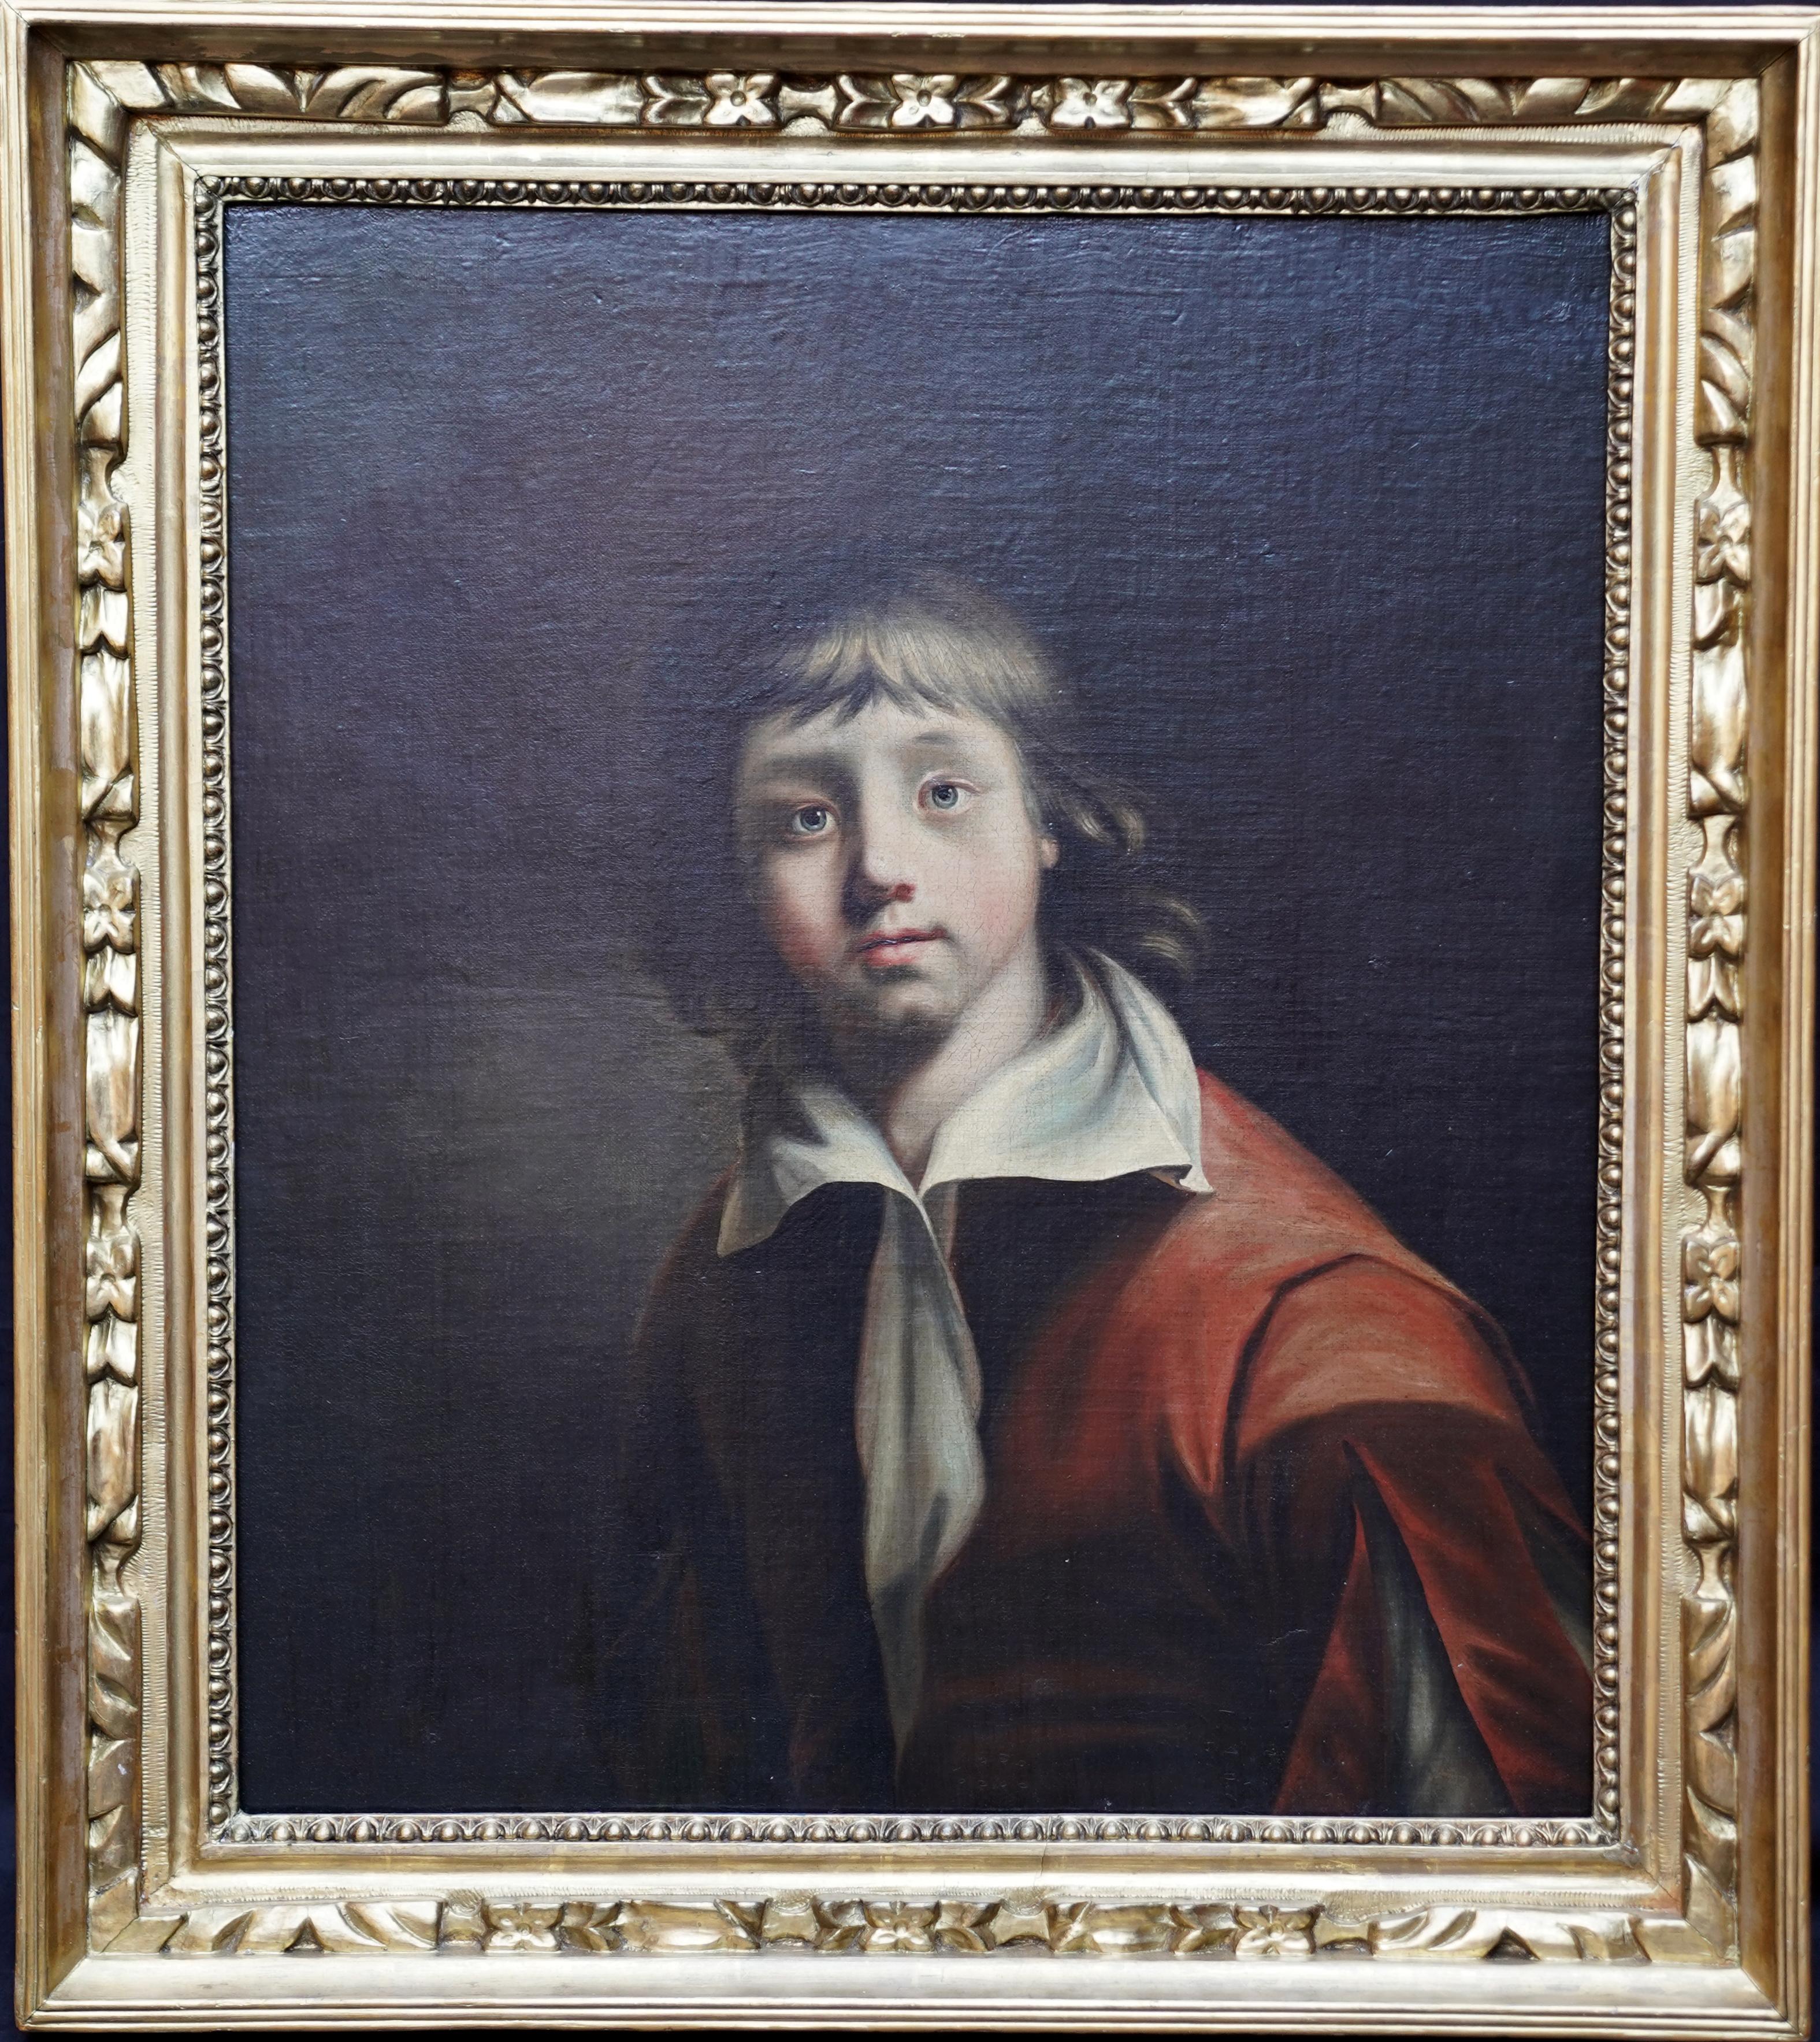 Portrait Painting de Joseph Wright of Derby - Retrato de un joven - Arte británico 1780 Viejo maestro retrato masculino pintura al óleo